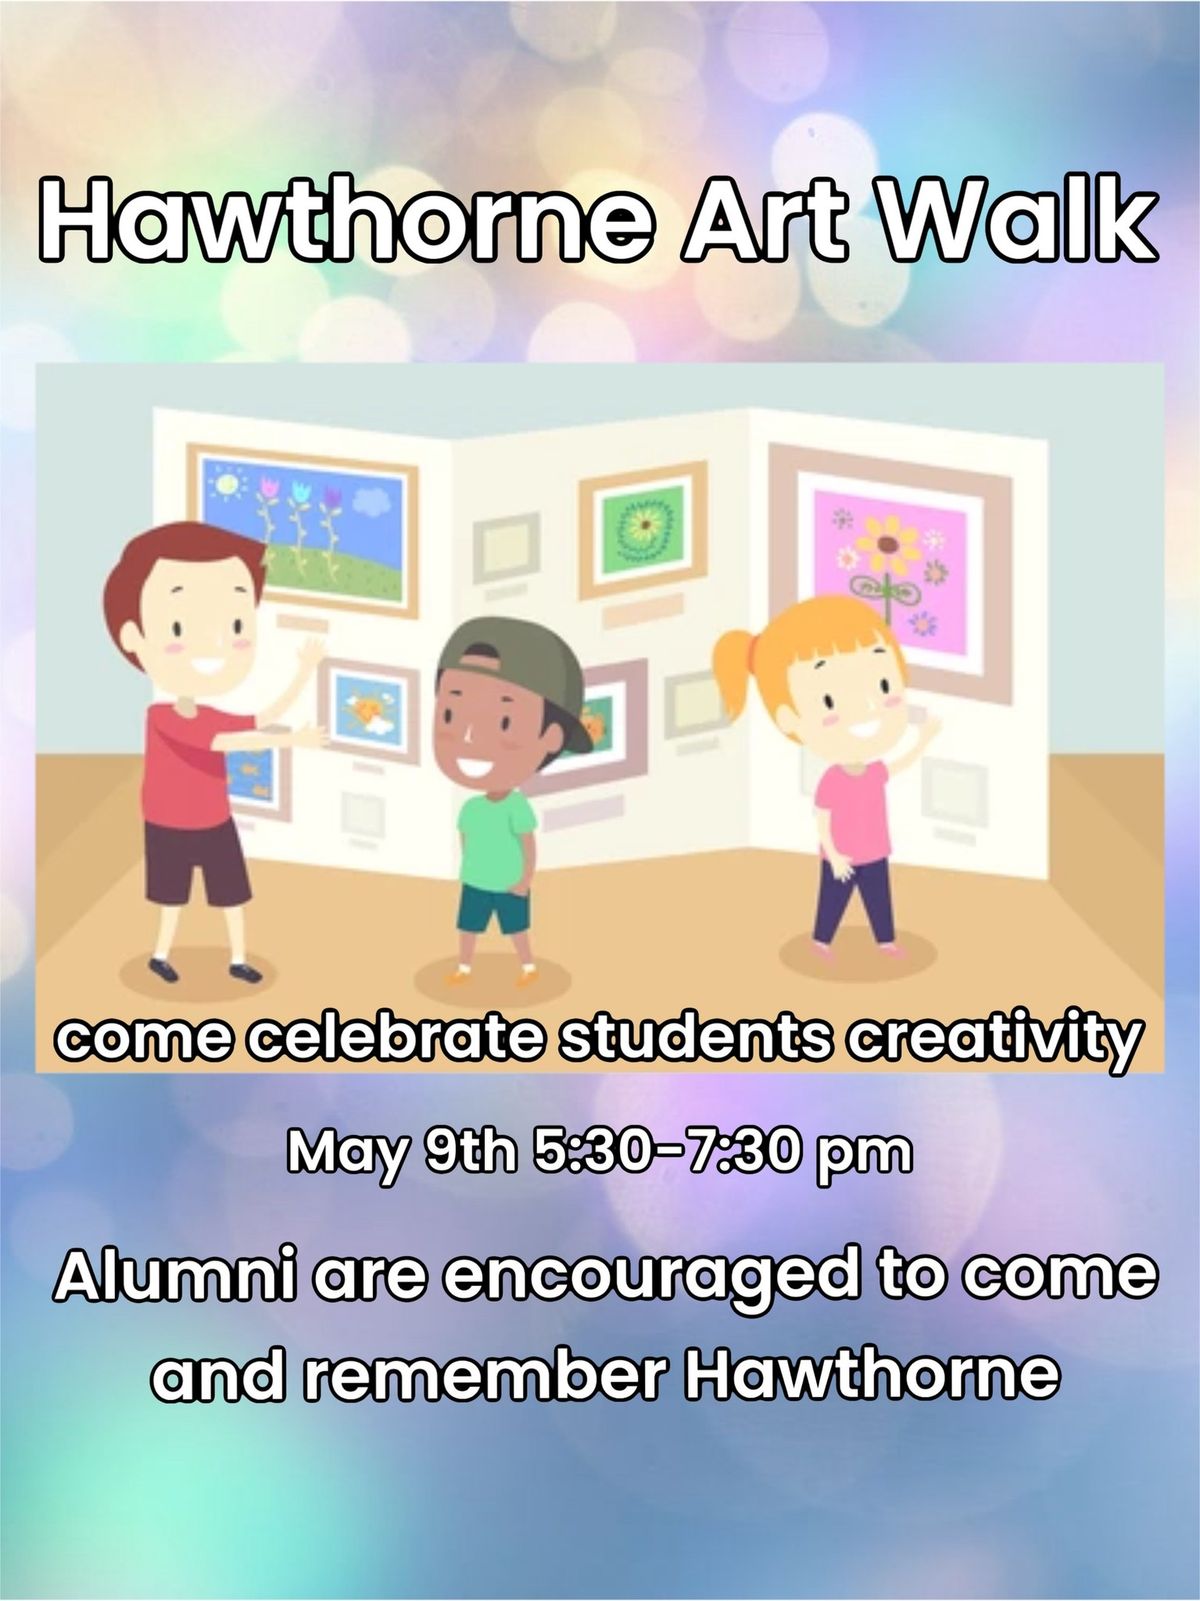 Hawthorne Art walk and Alumni event